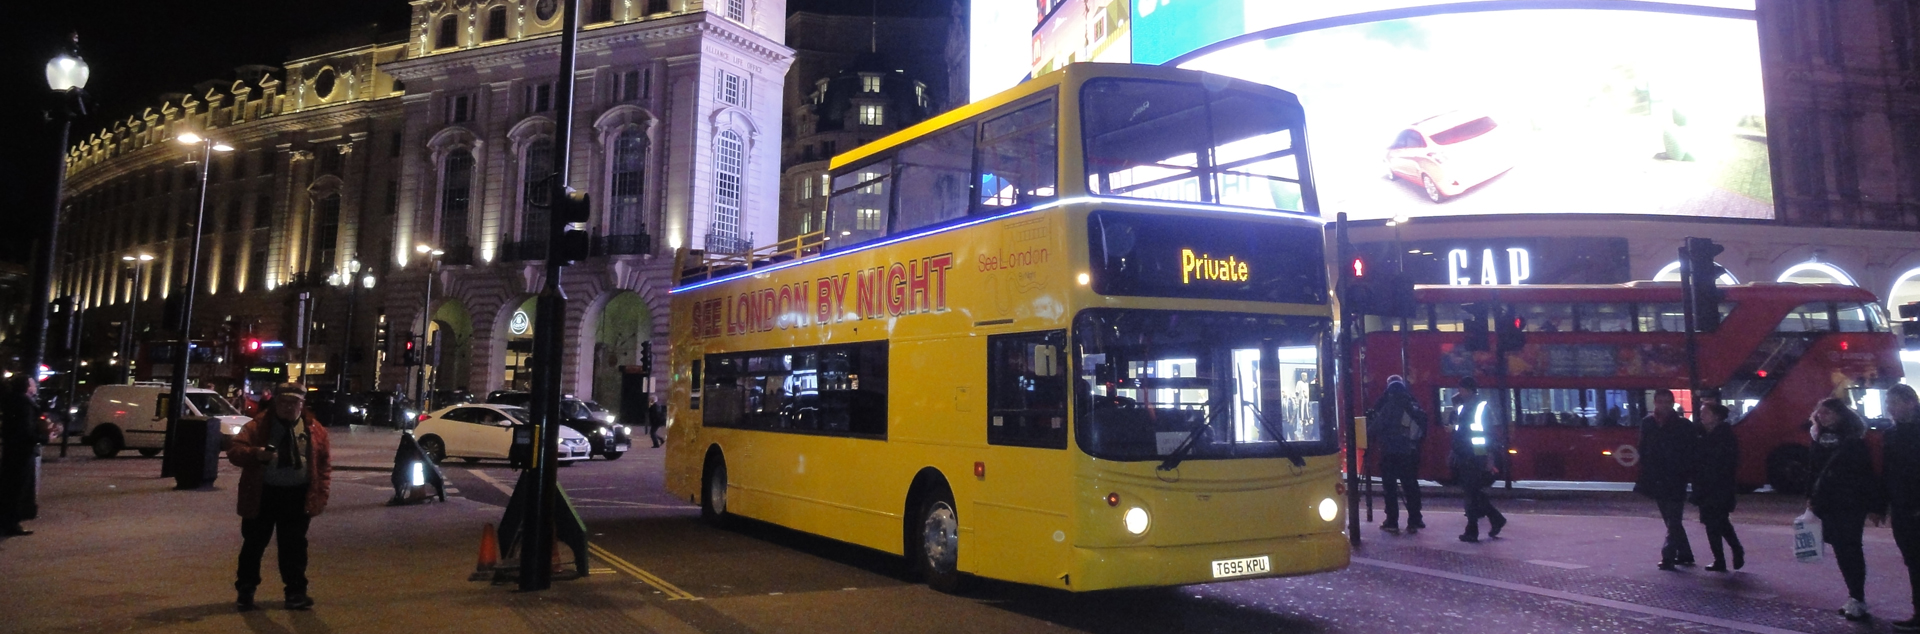 open top bus night tour london